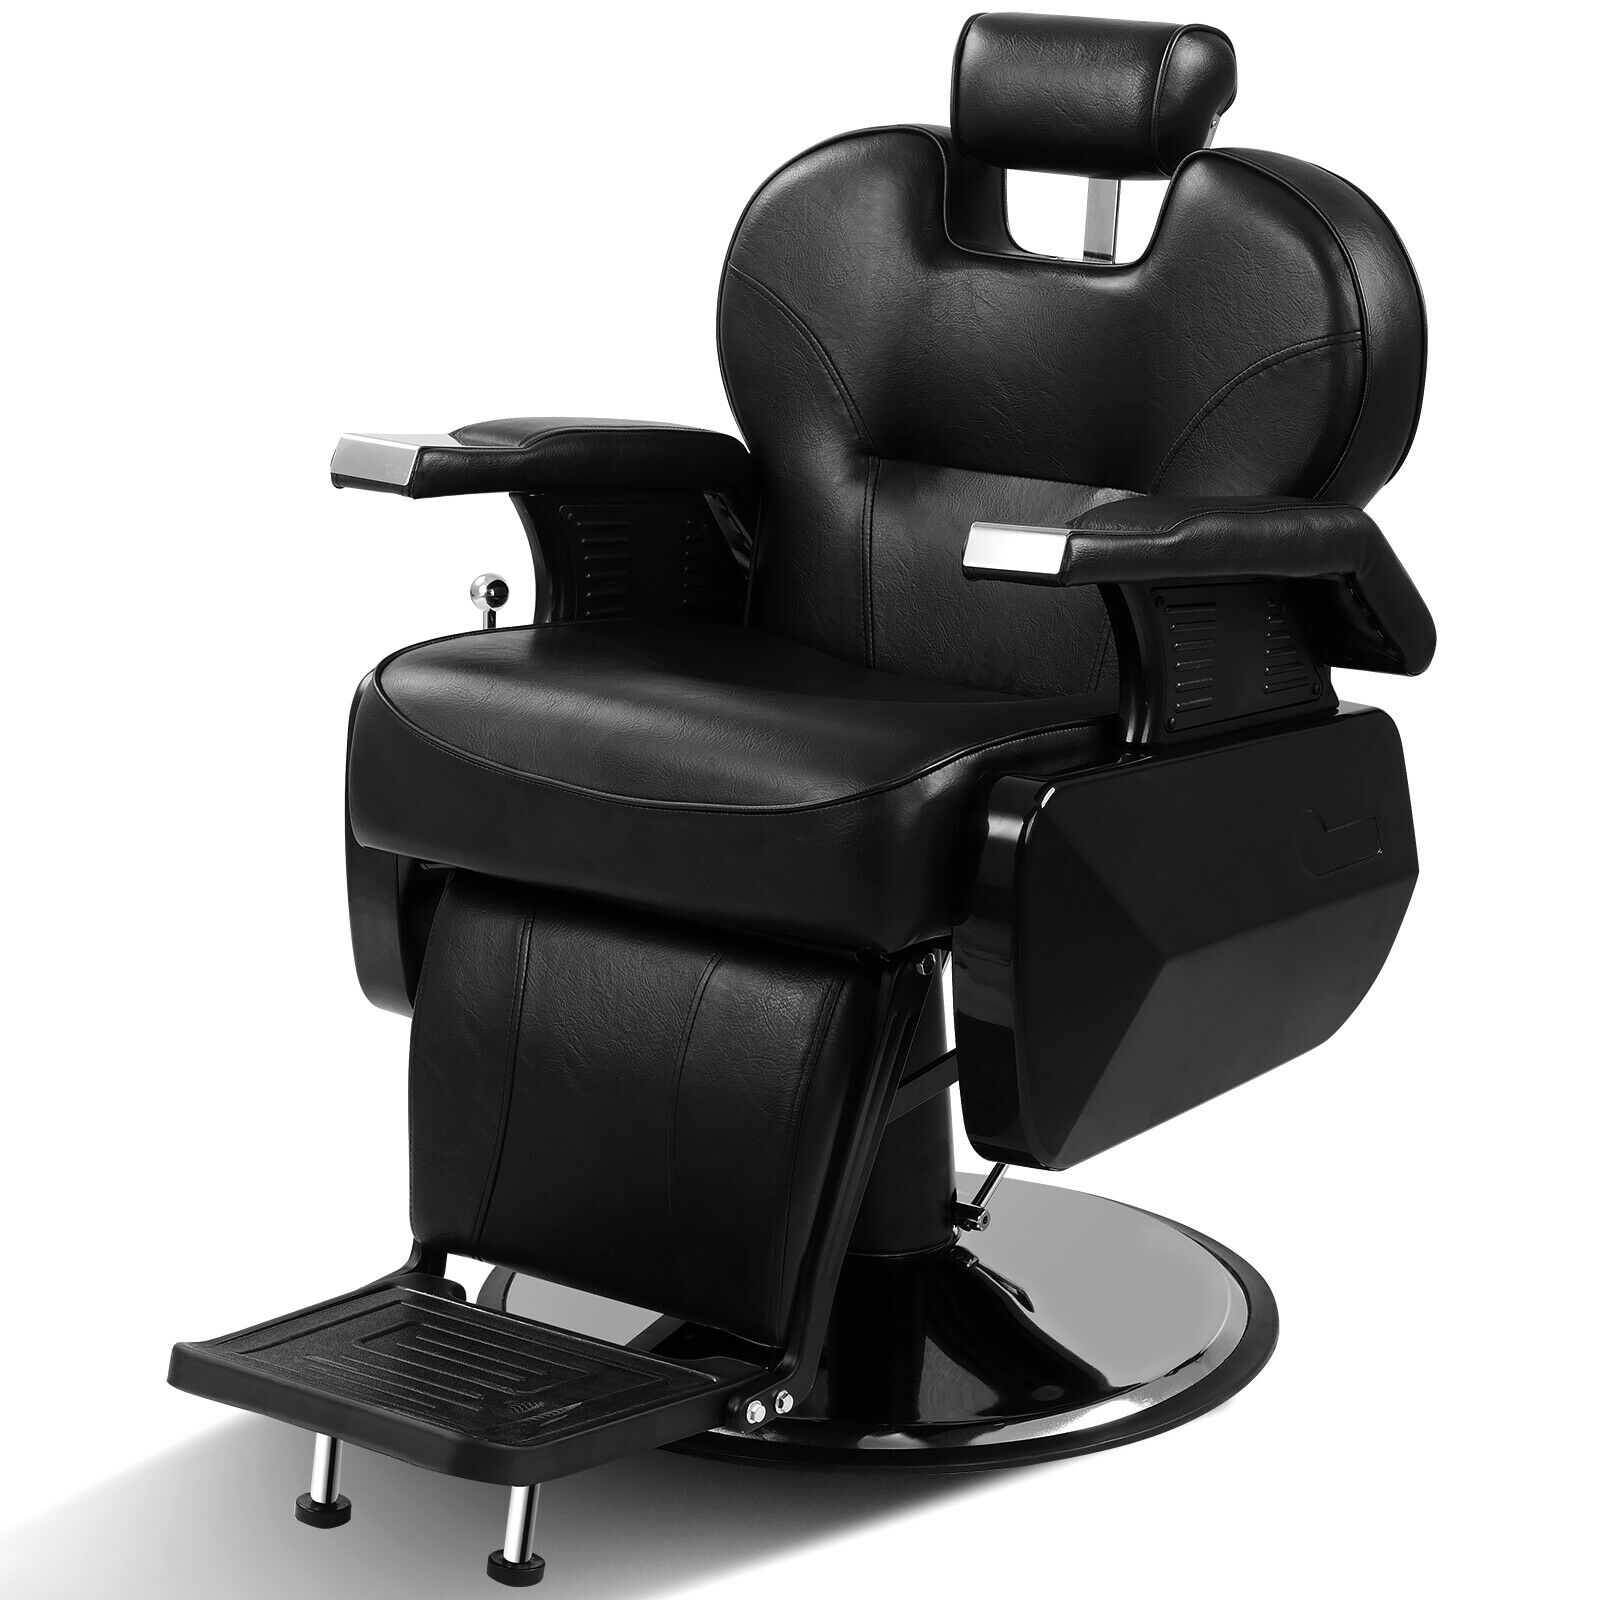 Image 41 - All Purpose Hydraulic Recline Barber Chair Salon Hair Styling Beauty Spa Shampoo